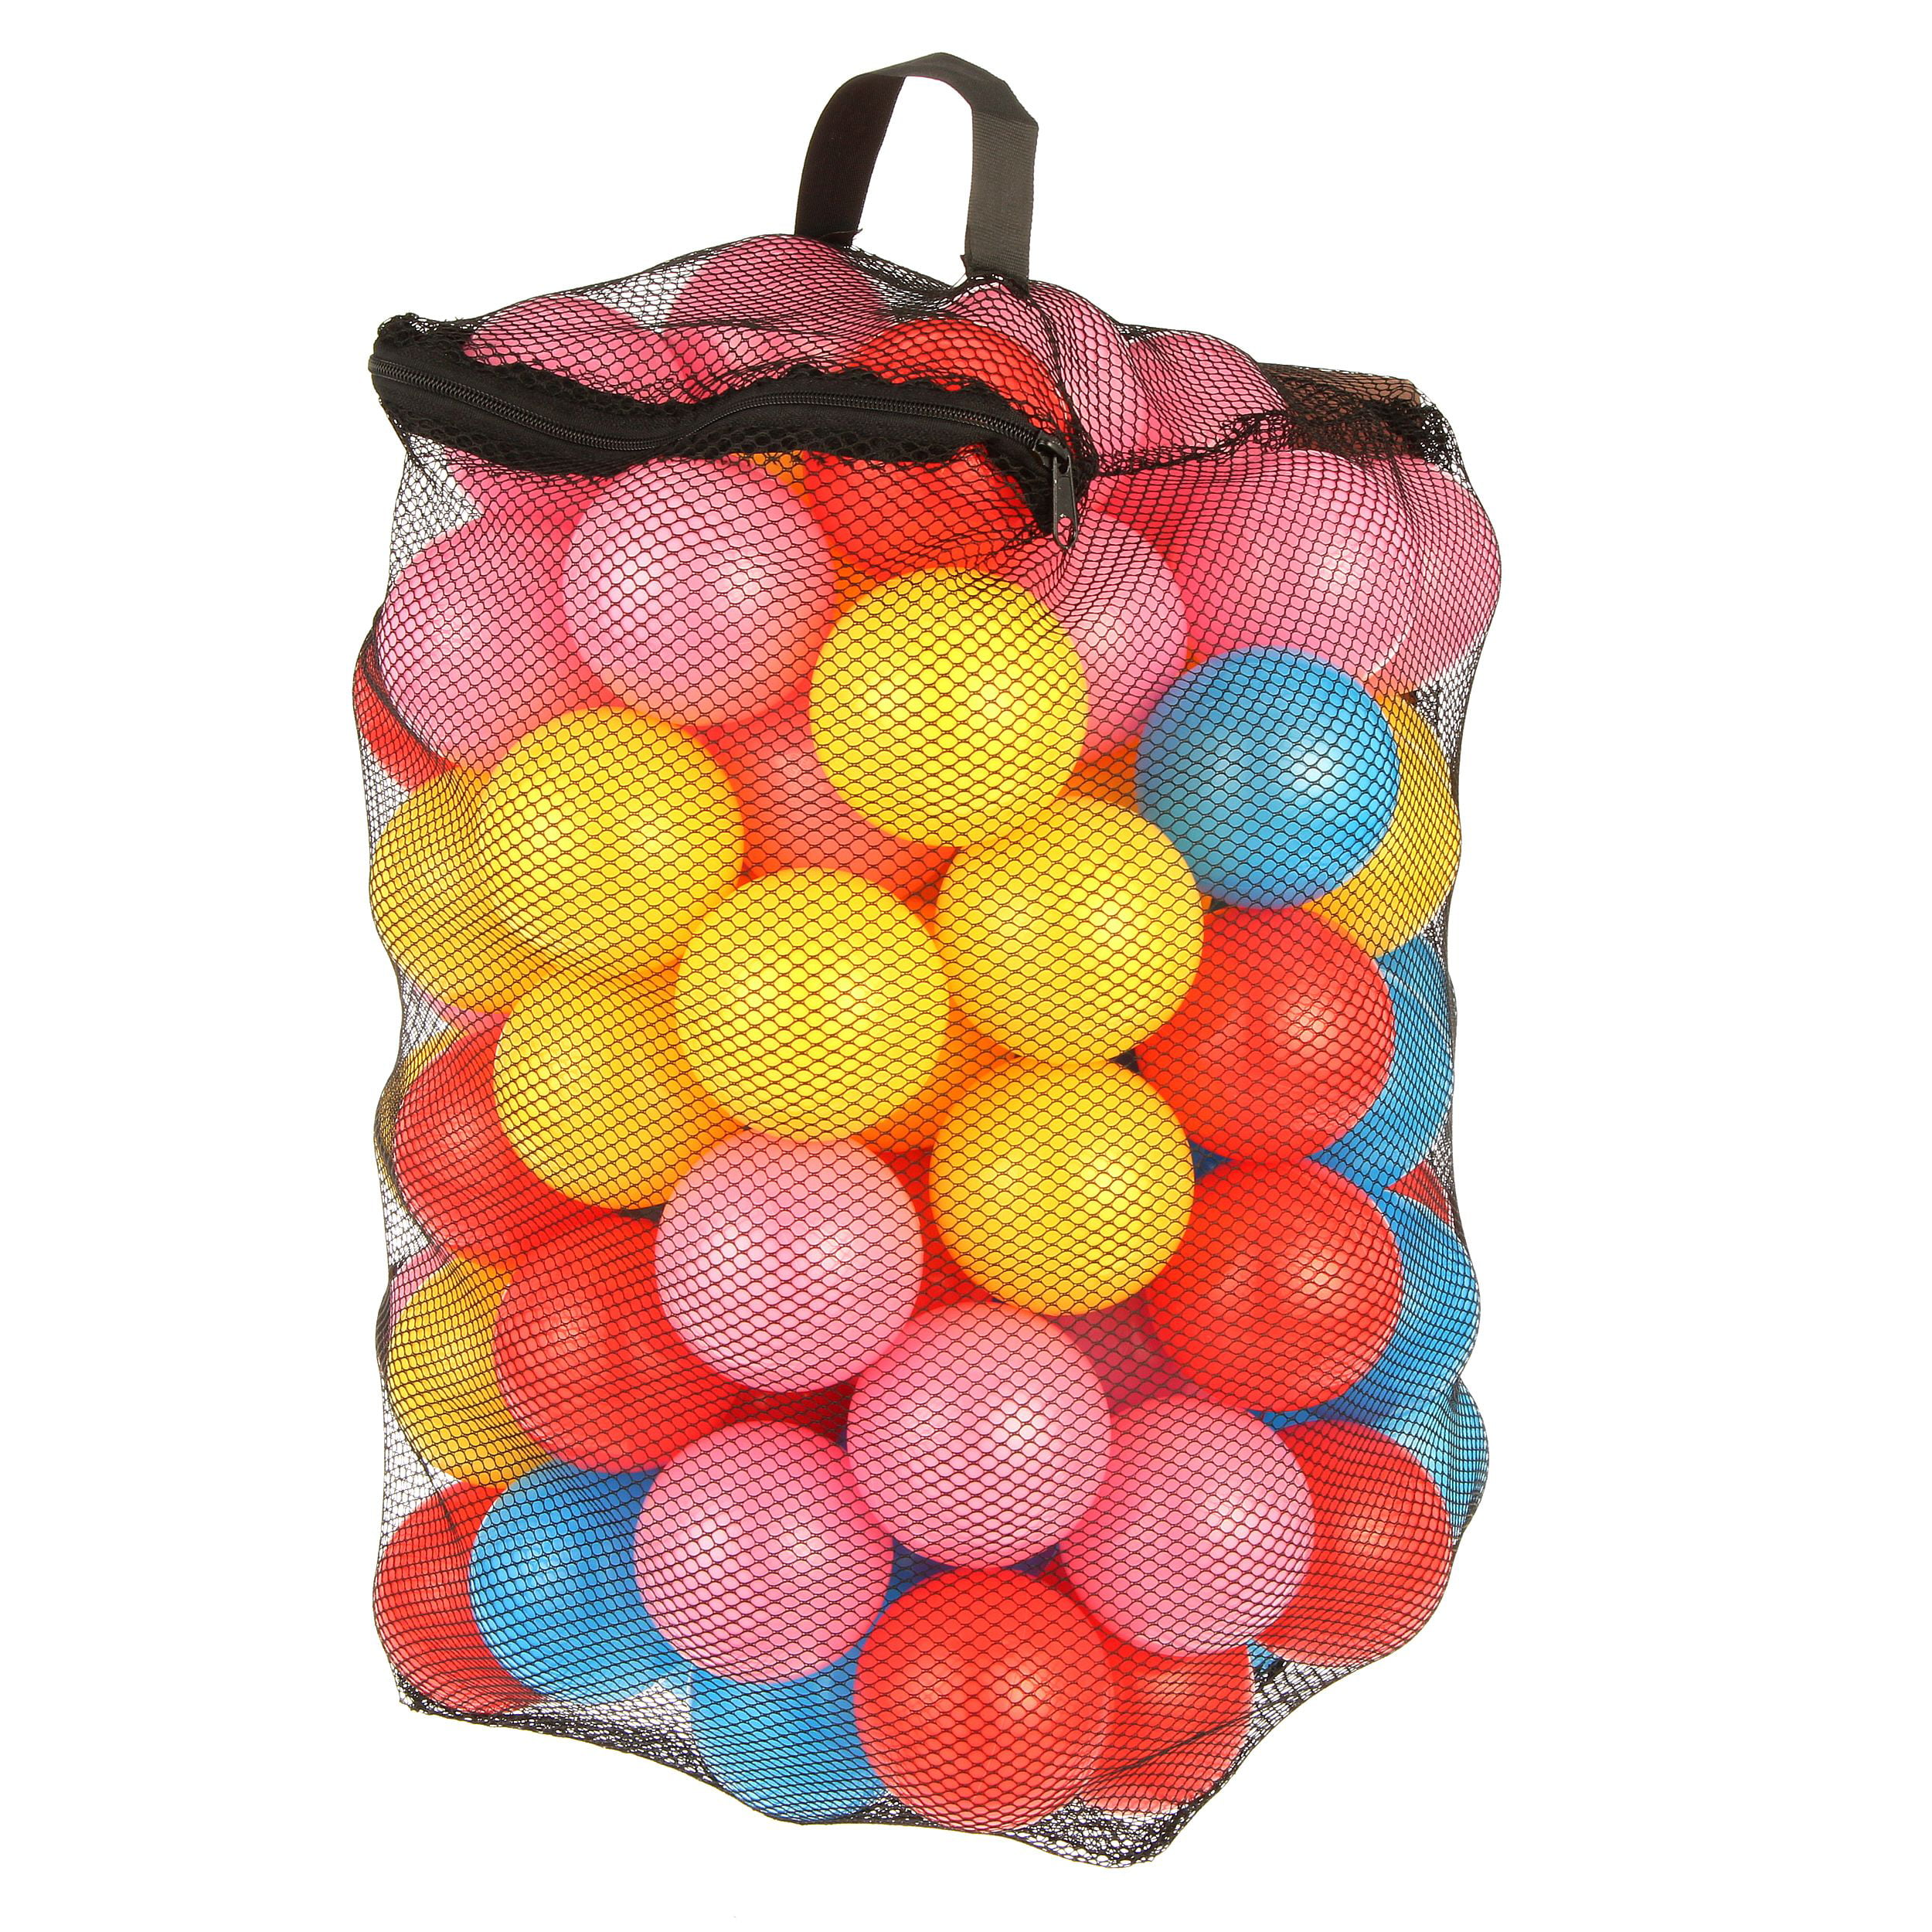 Kids Ball Pit Balls Storage Net Bag ToysOrganizer for 200 Balls Without ballTDCA 